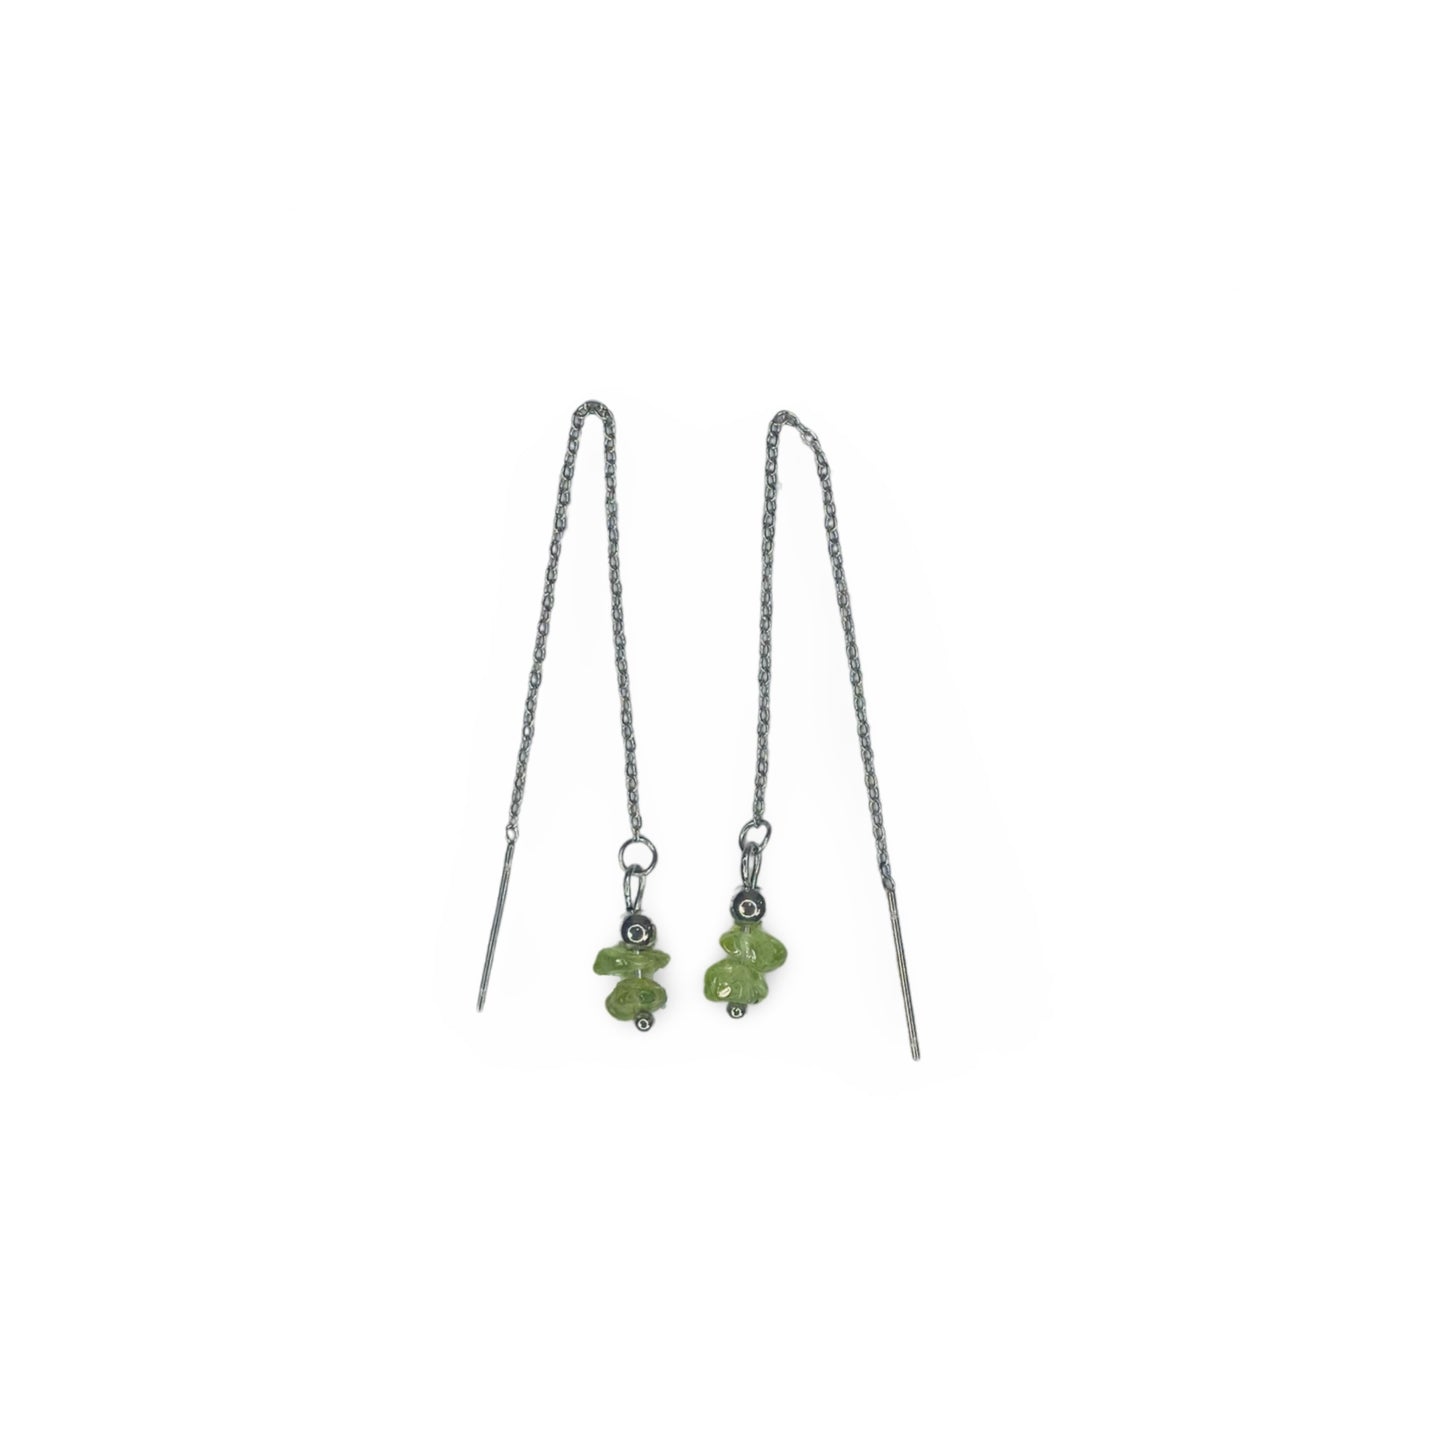 Chain Earrings with Peridot